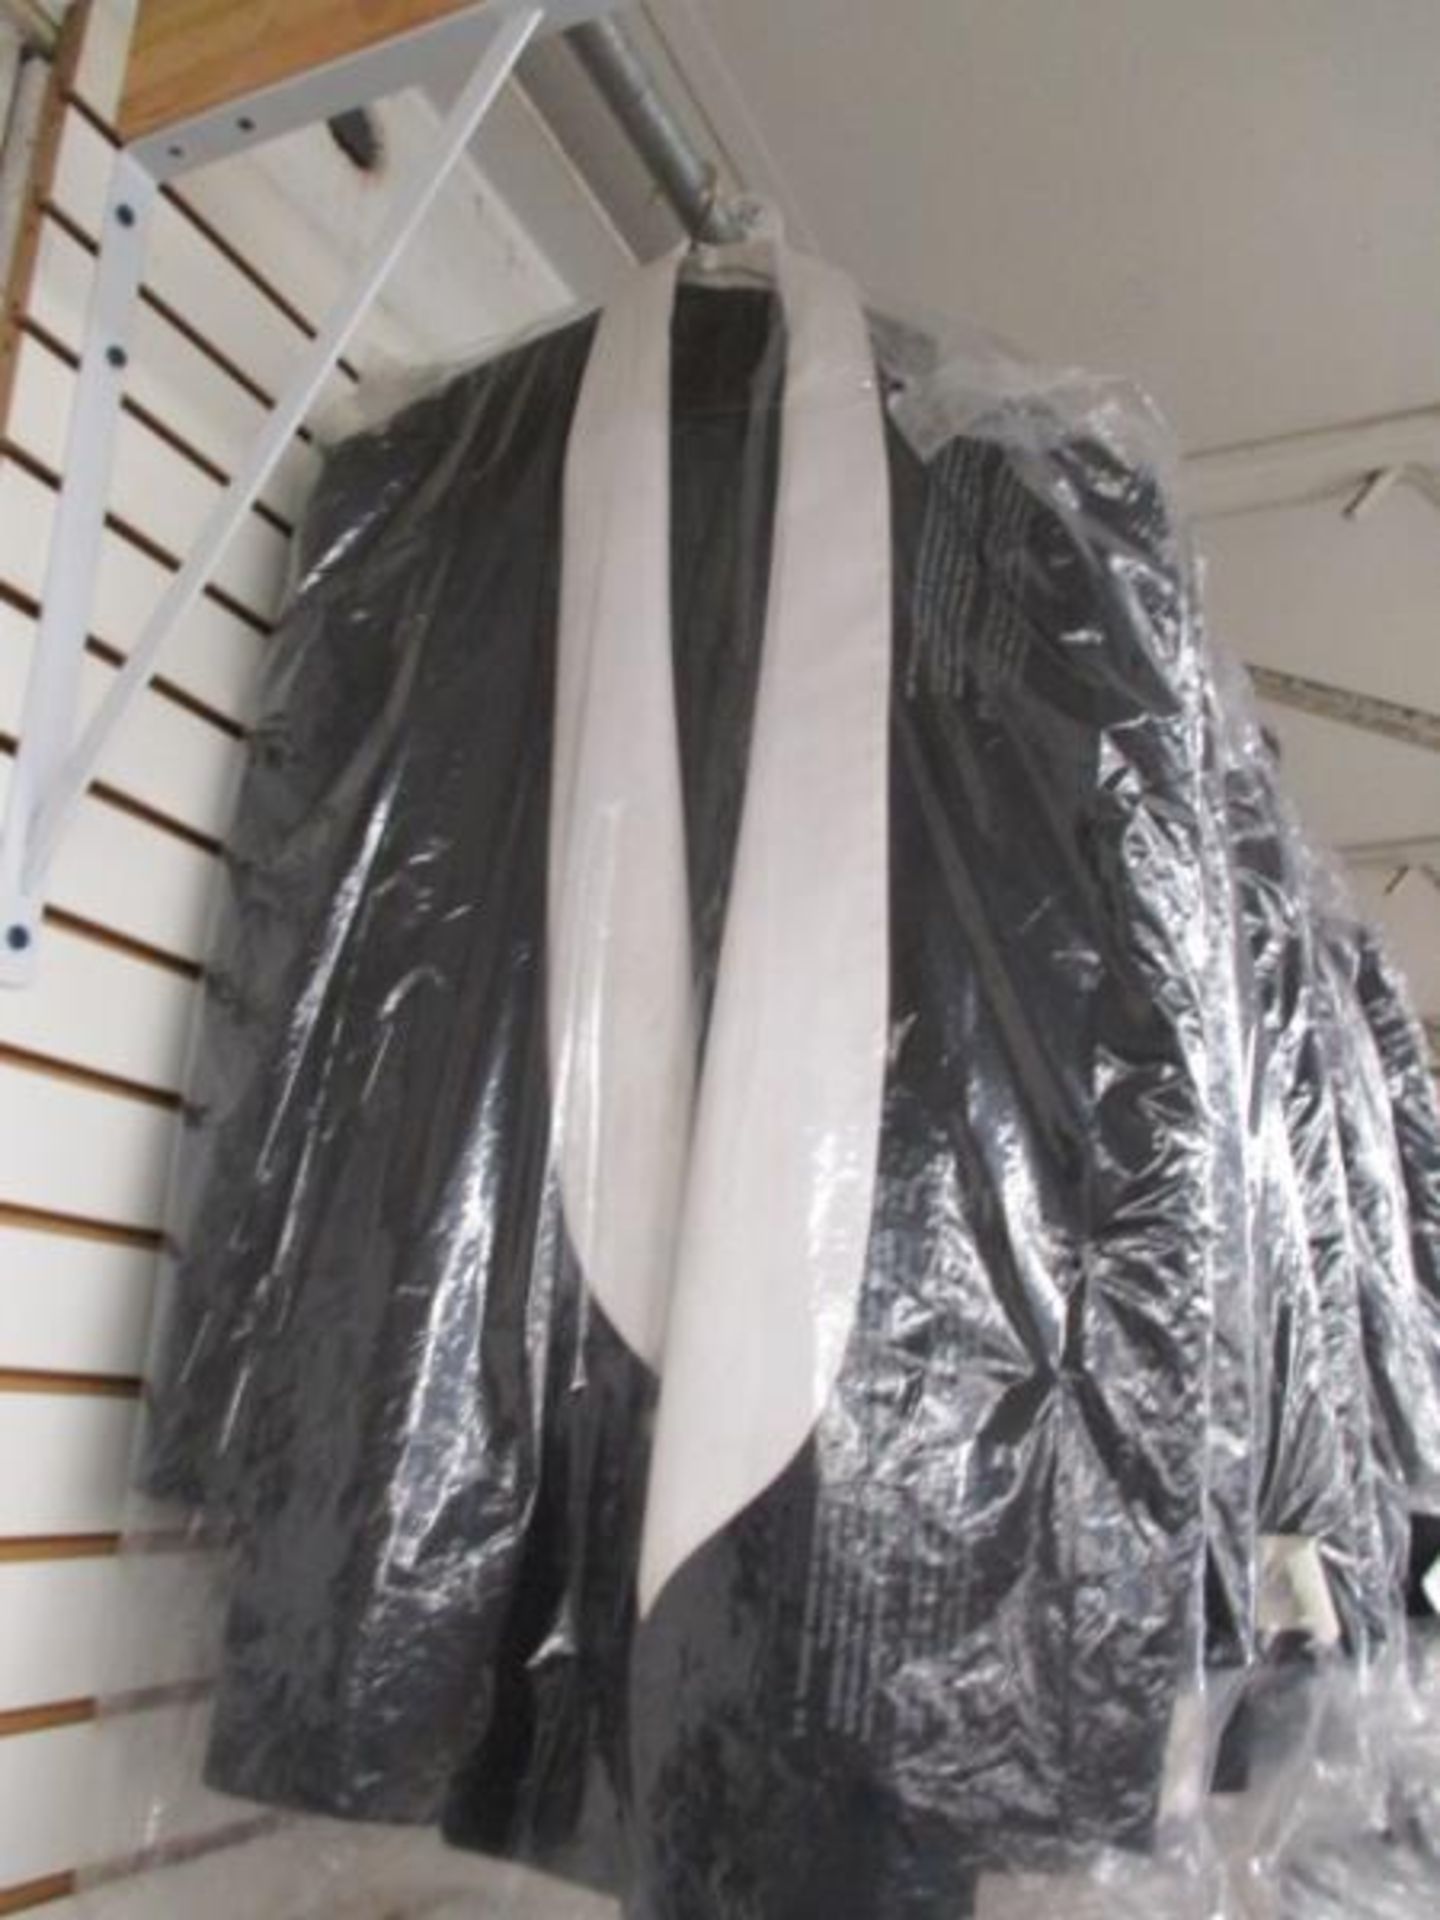 Lot Rental Mens Tux Jackets, Black, White, Dual Color, Etc, Approx. 1000 - Image 8 of 25